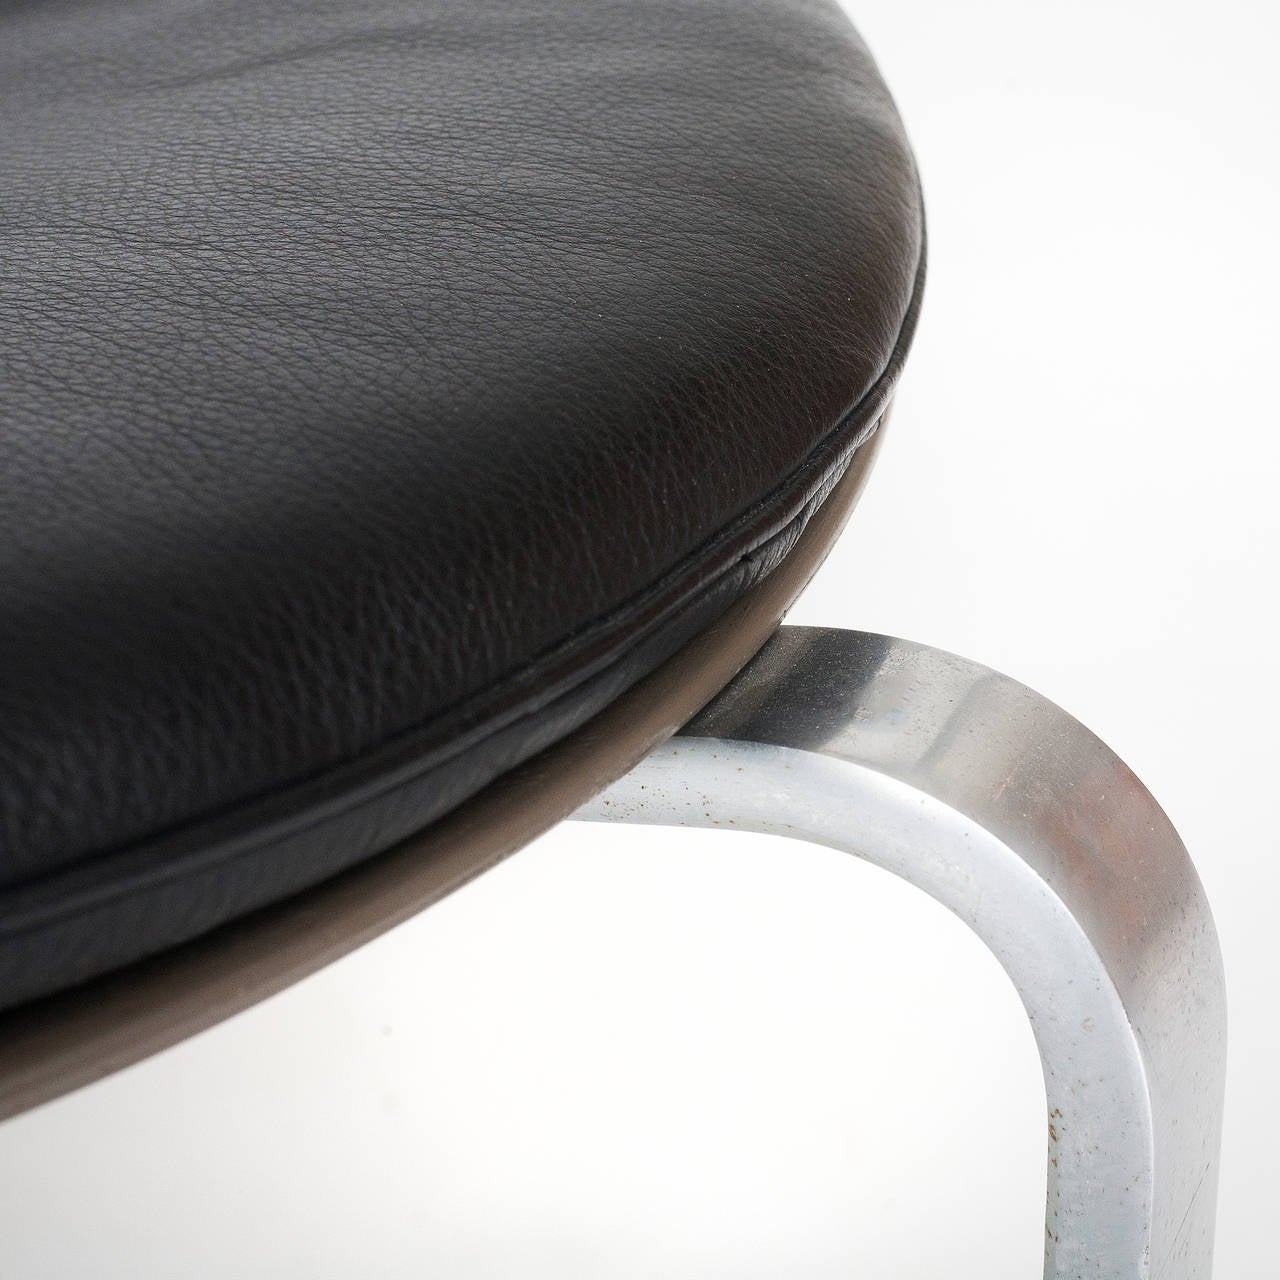 PK 33 stool with original dark grey leather on seat. Legs in steel.